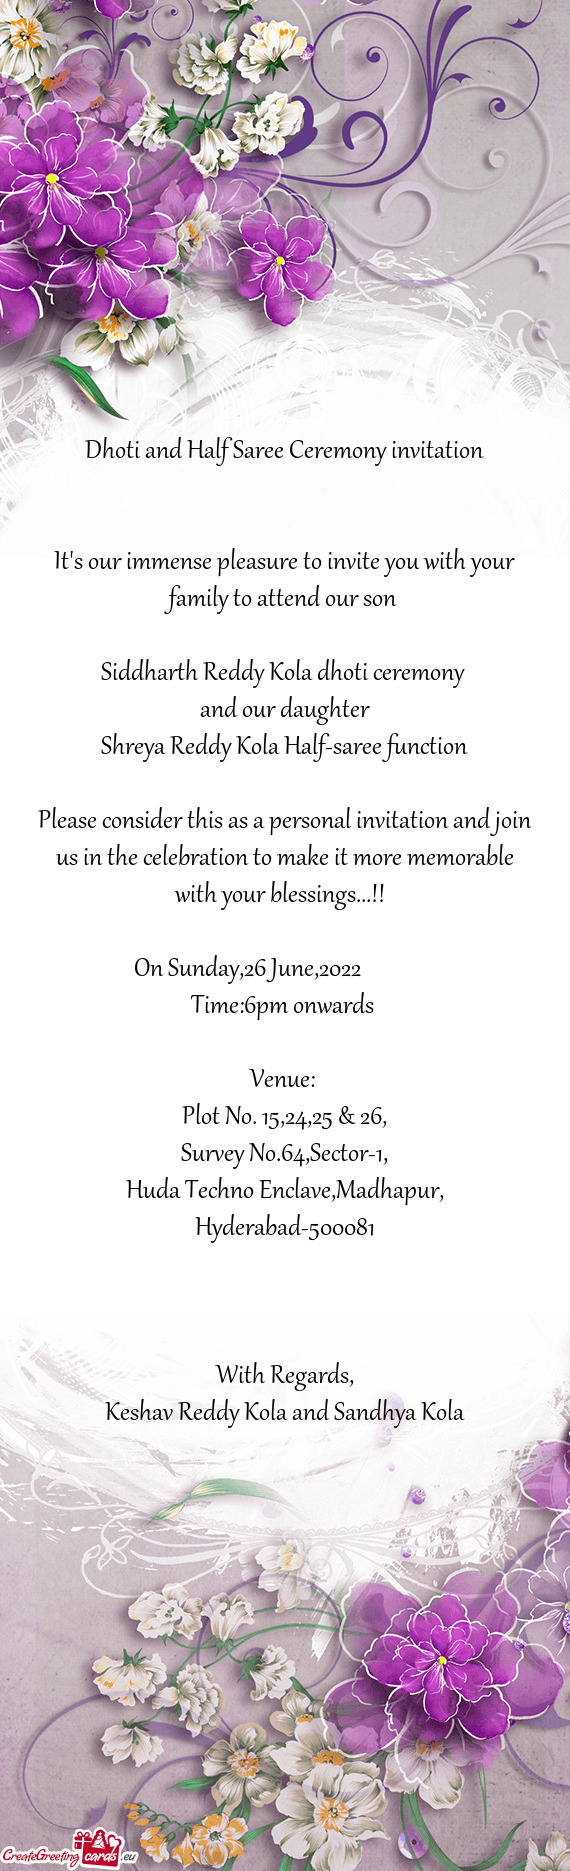 Siddharth Reddy Kola dhoti ceremony